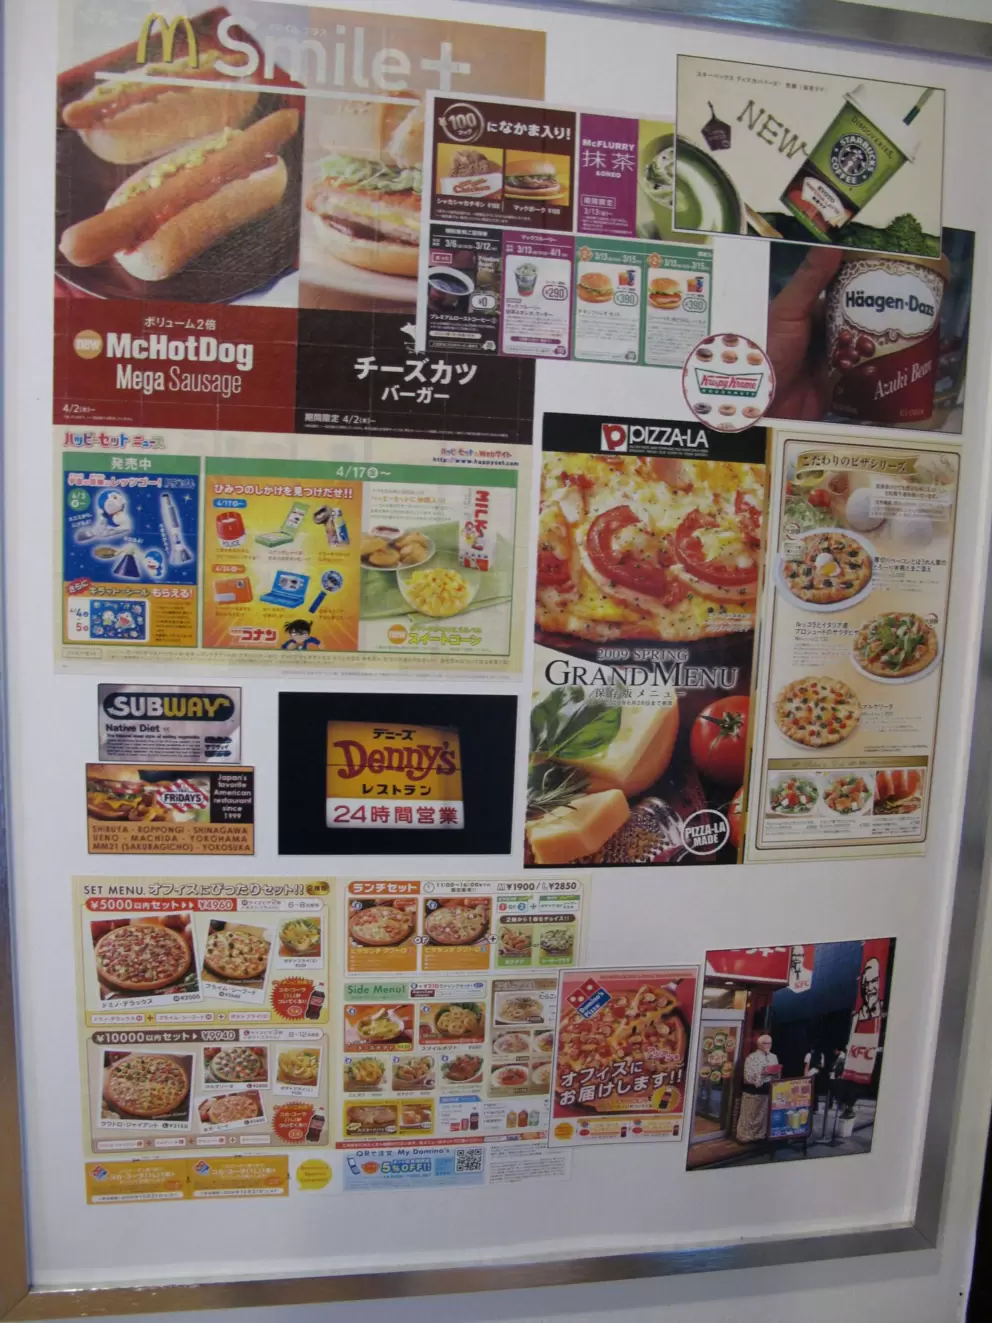 McDonalds menu from Japan.